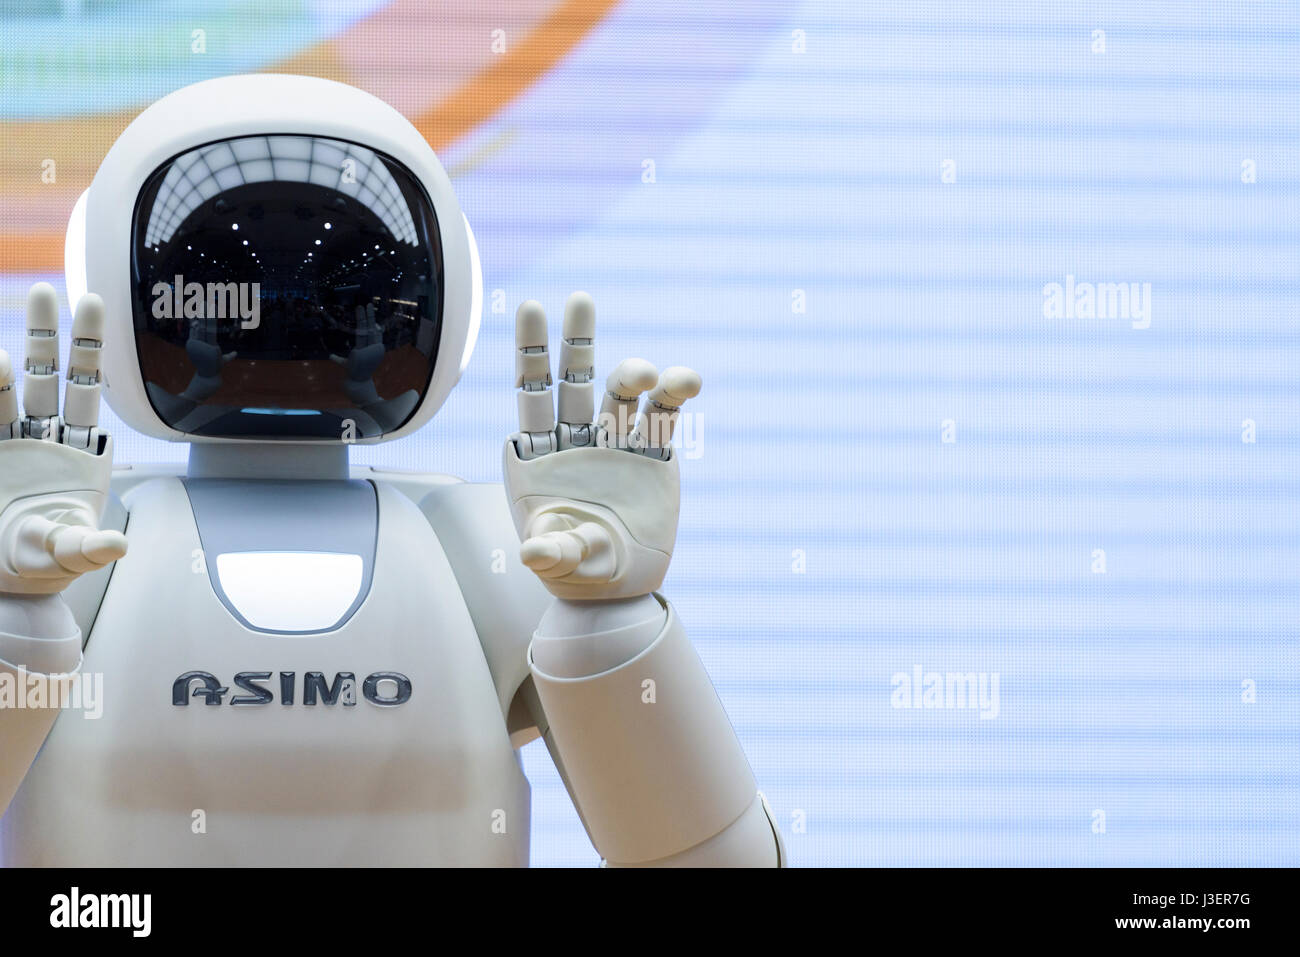 Asimo, the Honda car companies humanoid robot. Japanese robotic technology. Stock Photo